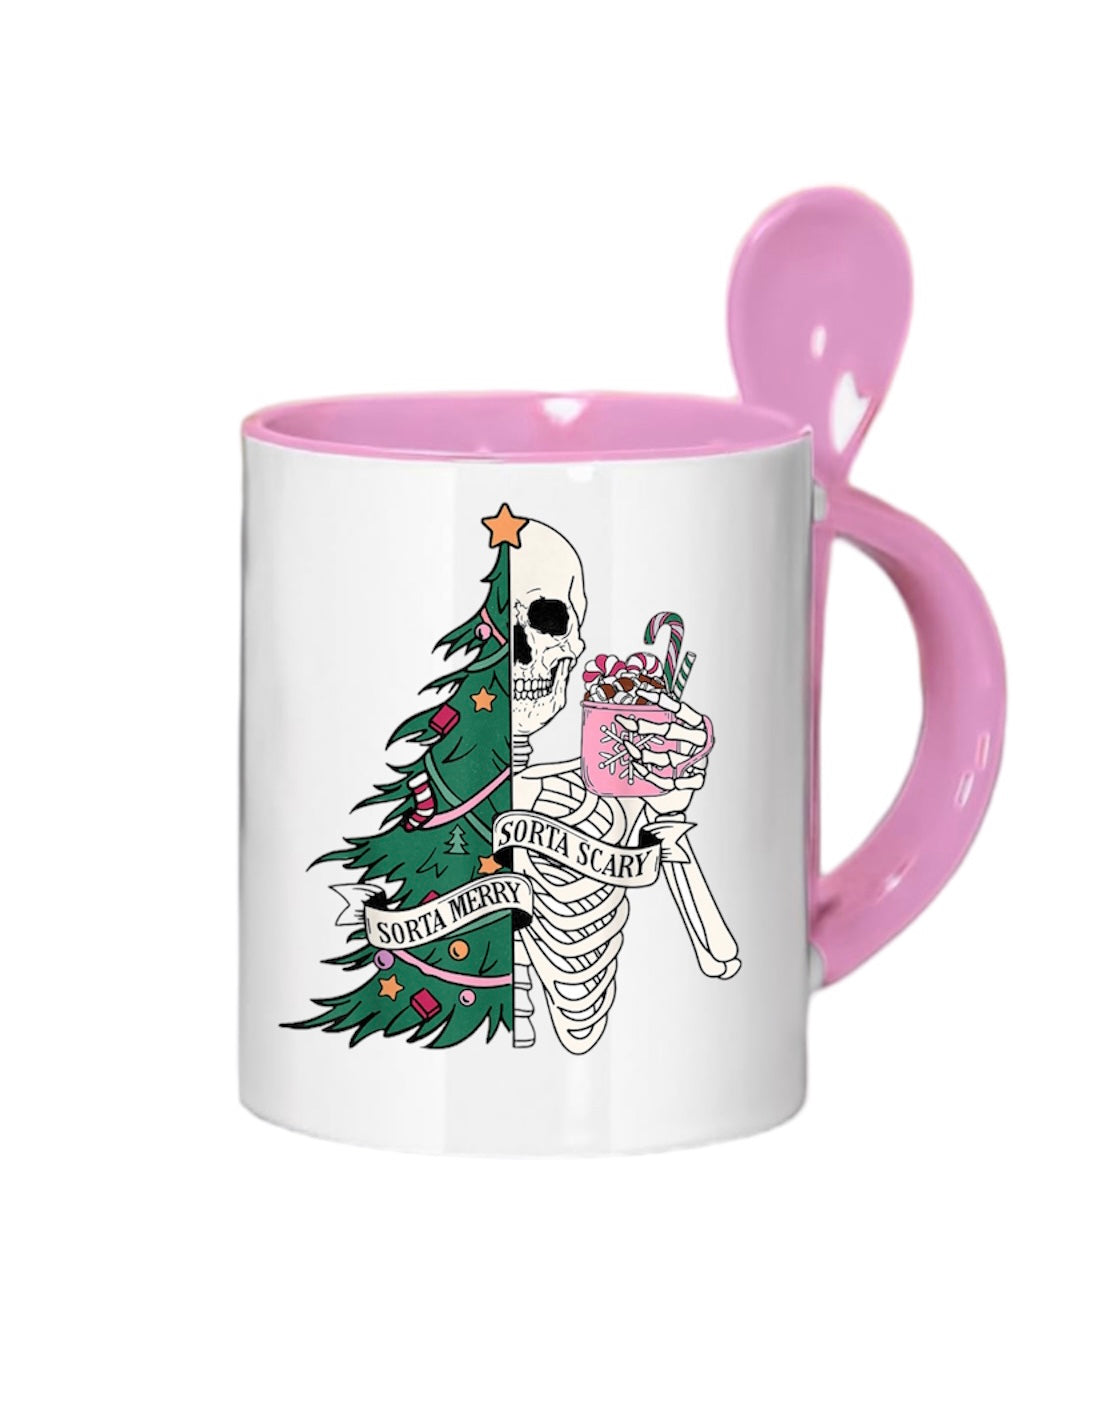 Sorta merry sorta scary 11oz mug with spoon